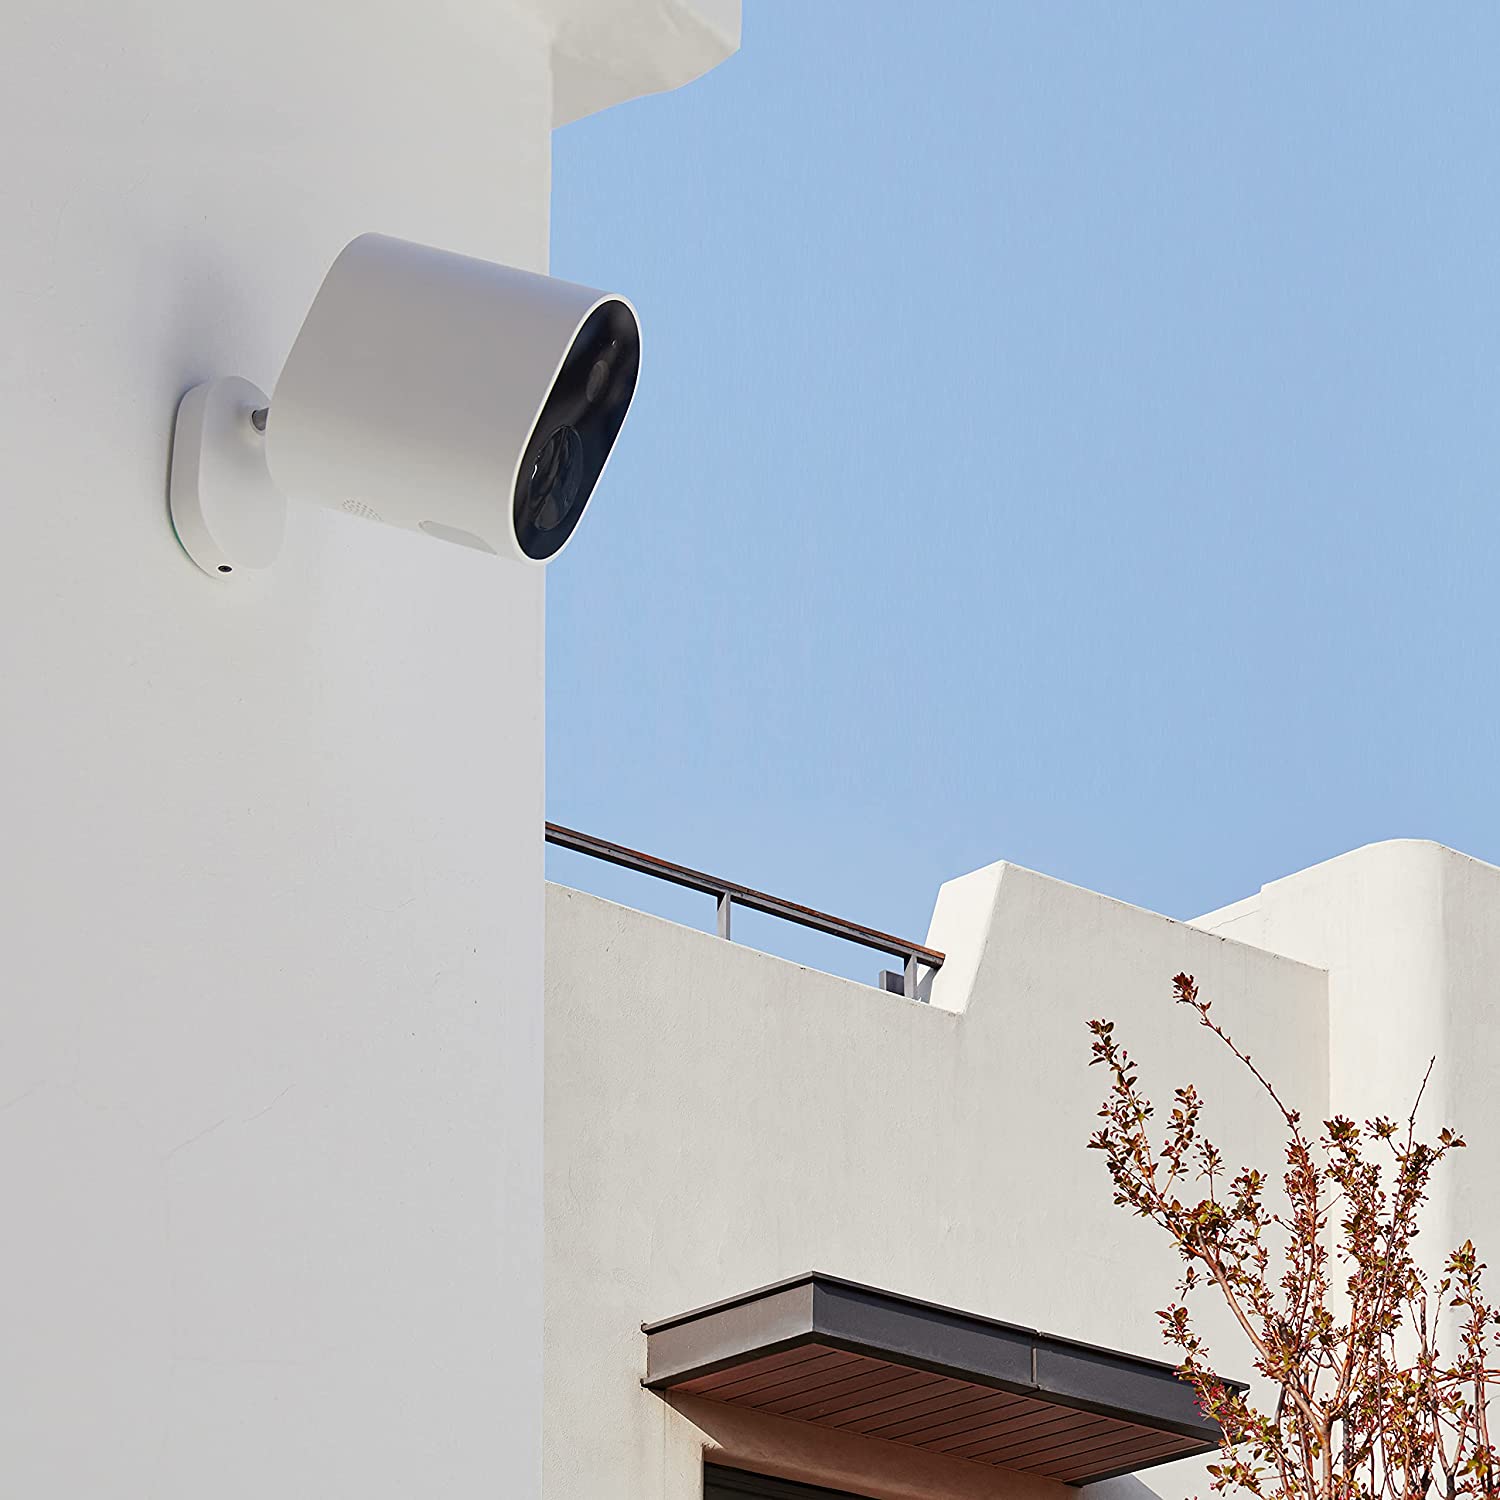 دوربین نظارتی هوشمند شیائومی نسخه گلوبال به همراه گیت وی مدل XIAOMI OUTDOOR SECURITY CAMERA MWC10 1080